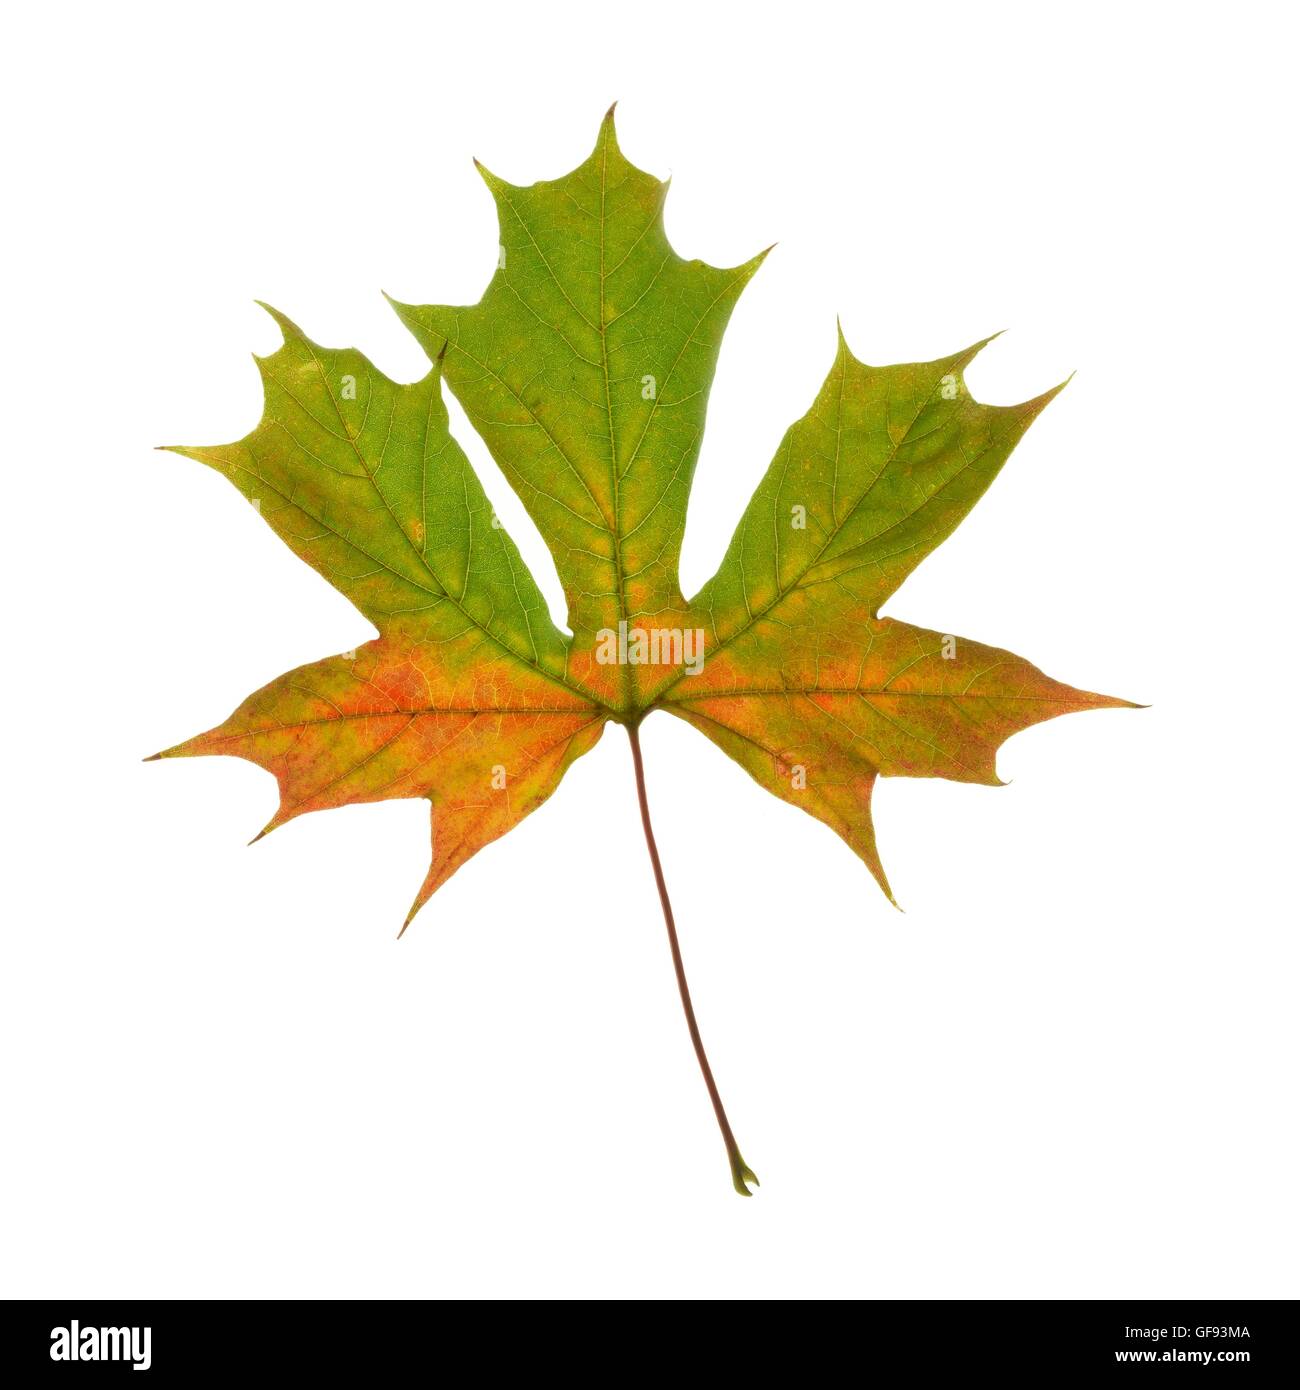 Sycamore (Acer pseudoplatanus) leaf, studio shot. Stock Photo